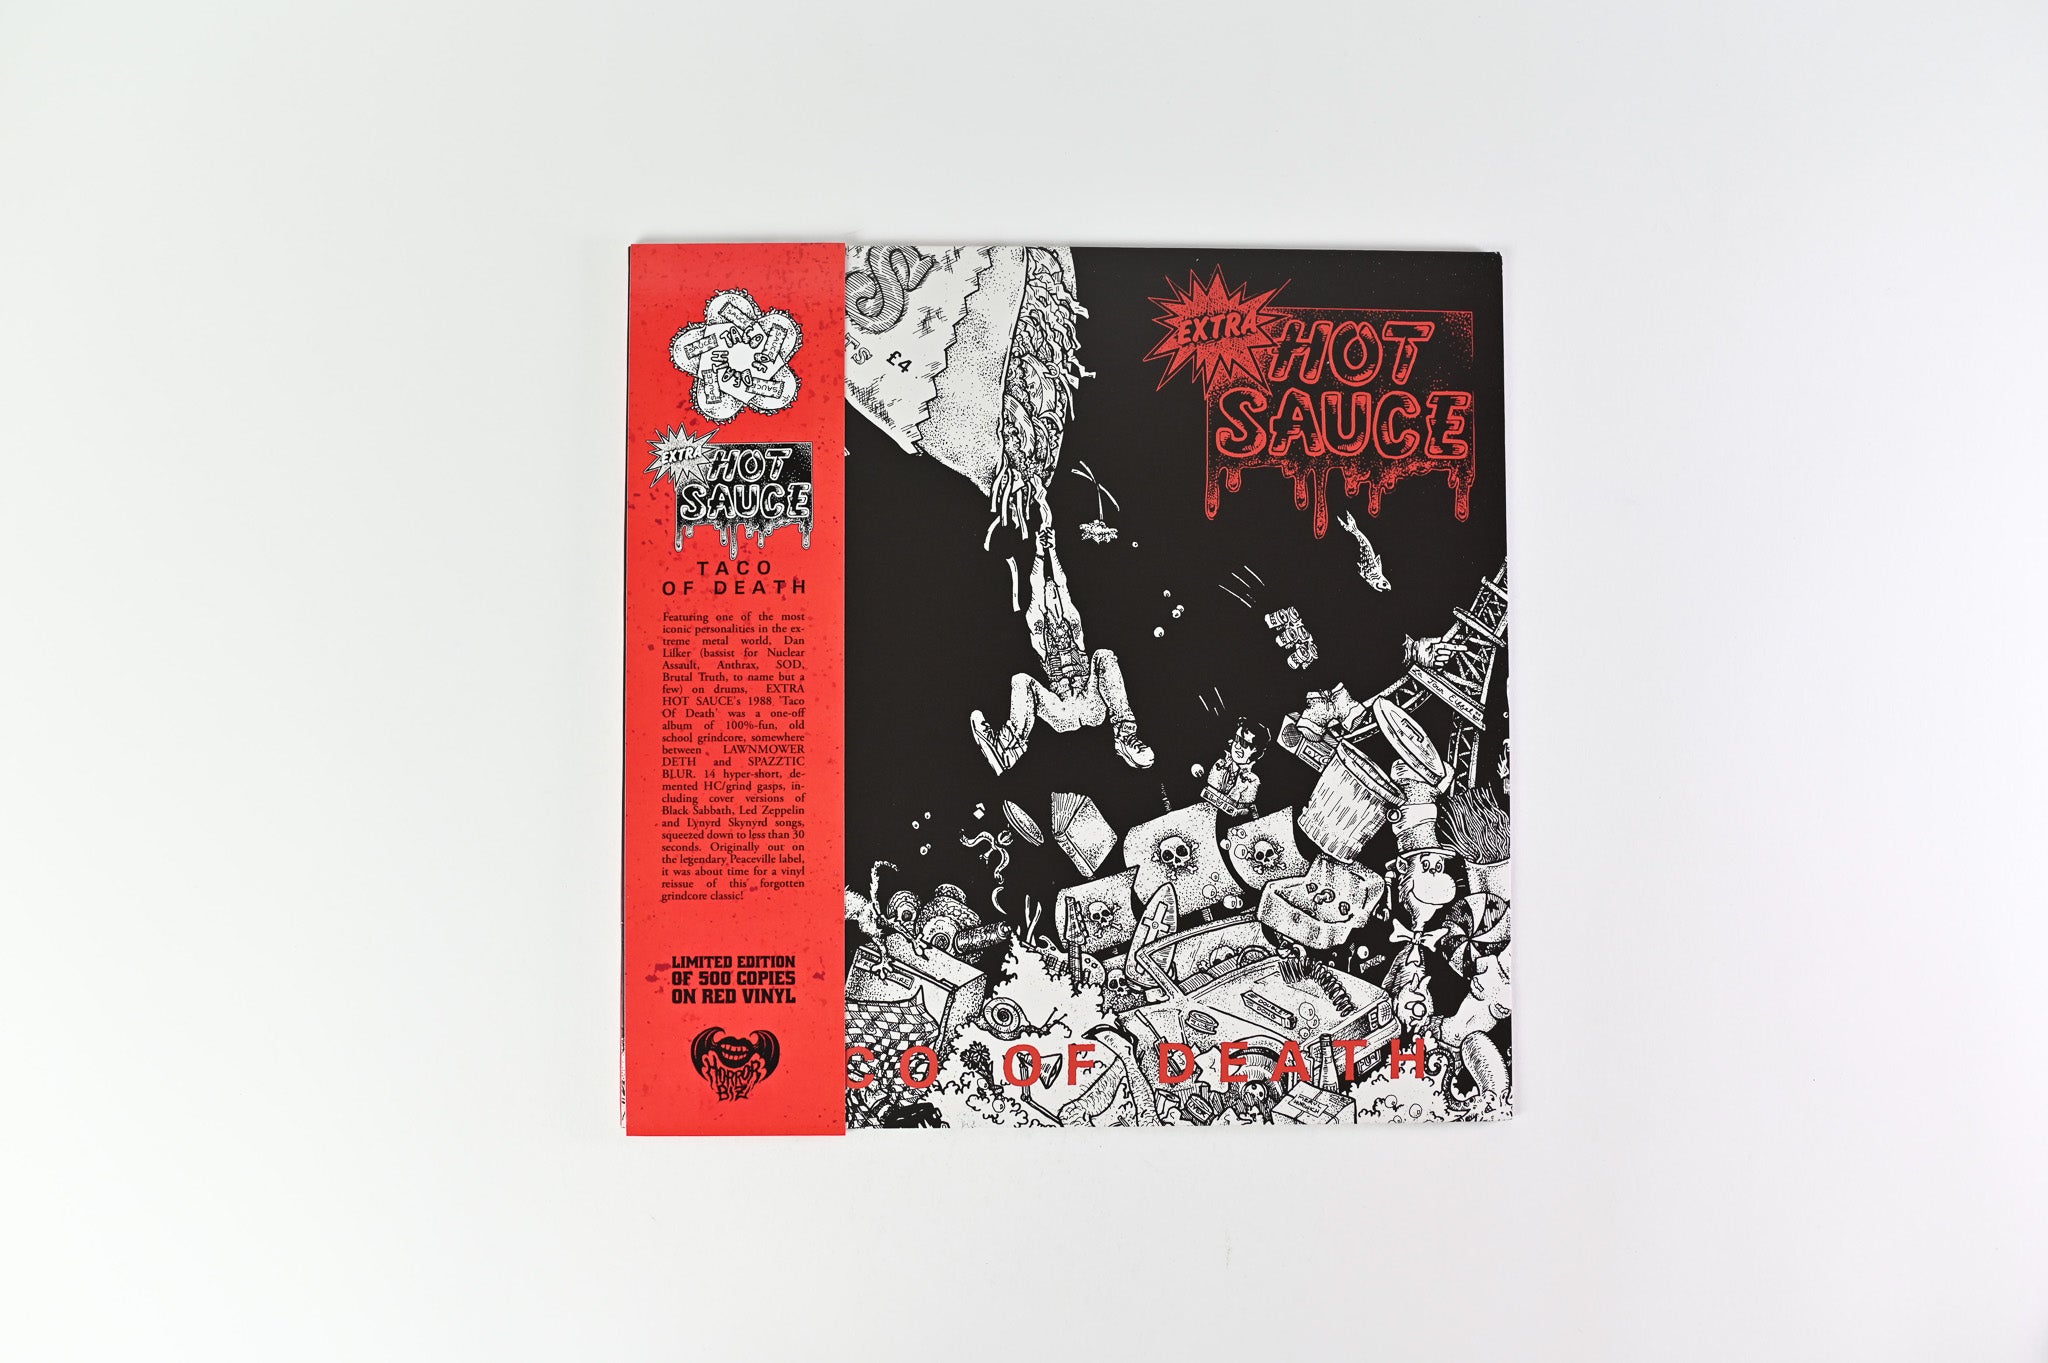 Extra Hot Sauce - Taco Of Death on Horror Biz - Red Vinyl